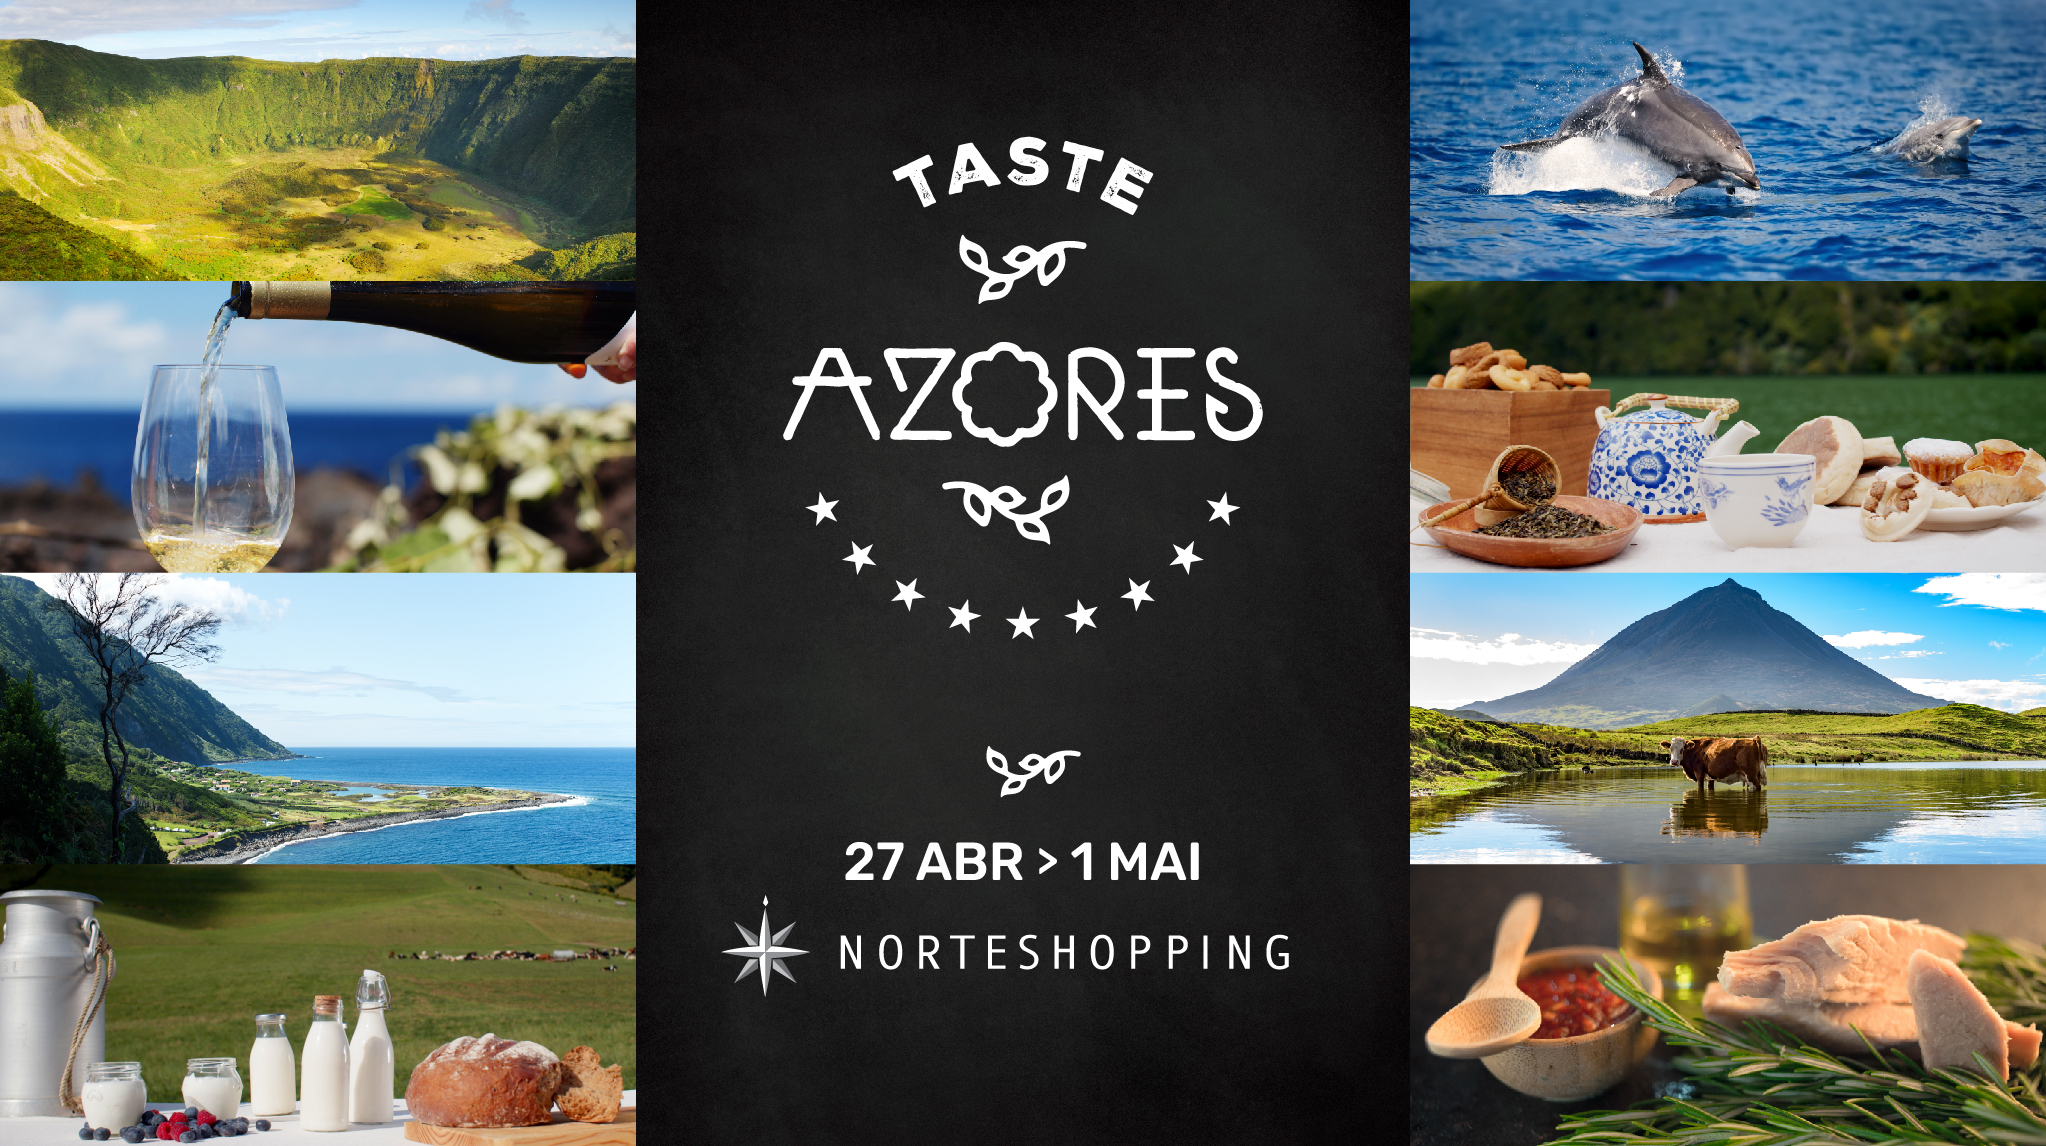 Taste Azores no NorteShopping regressa para promover produtos e serviços dos Açores